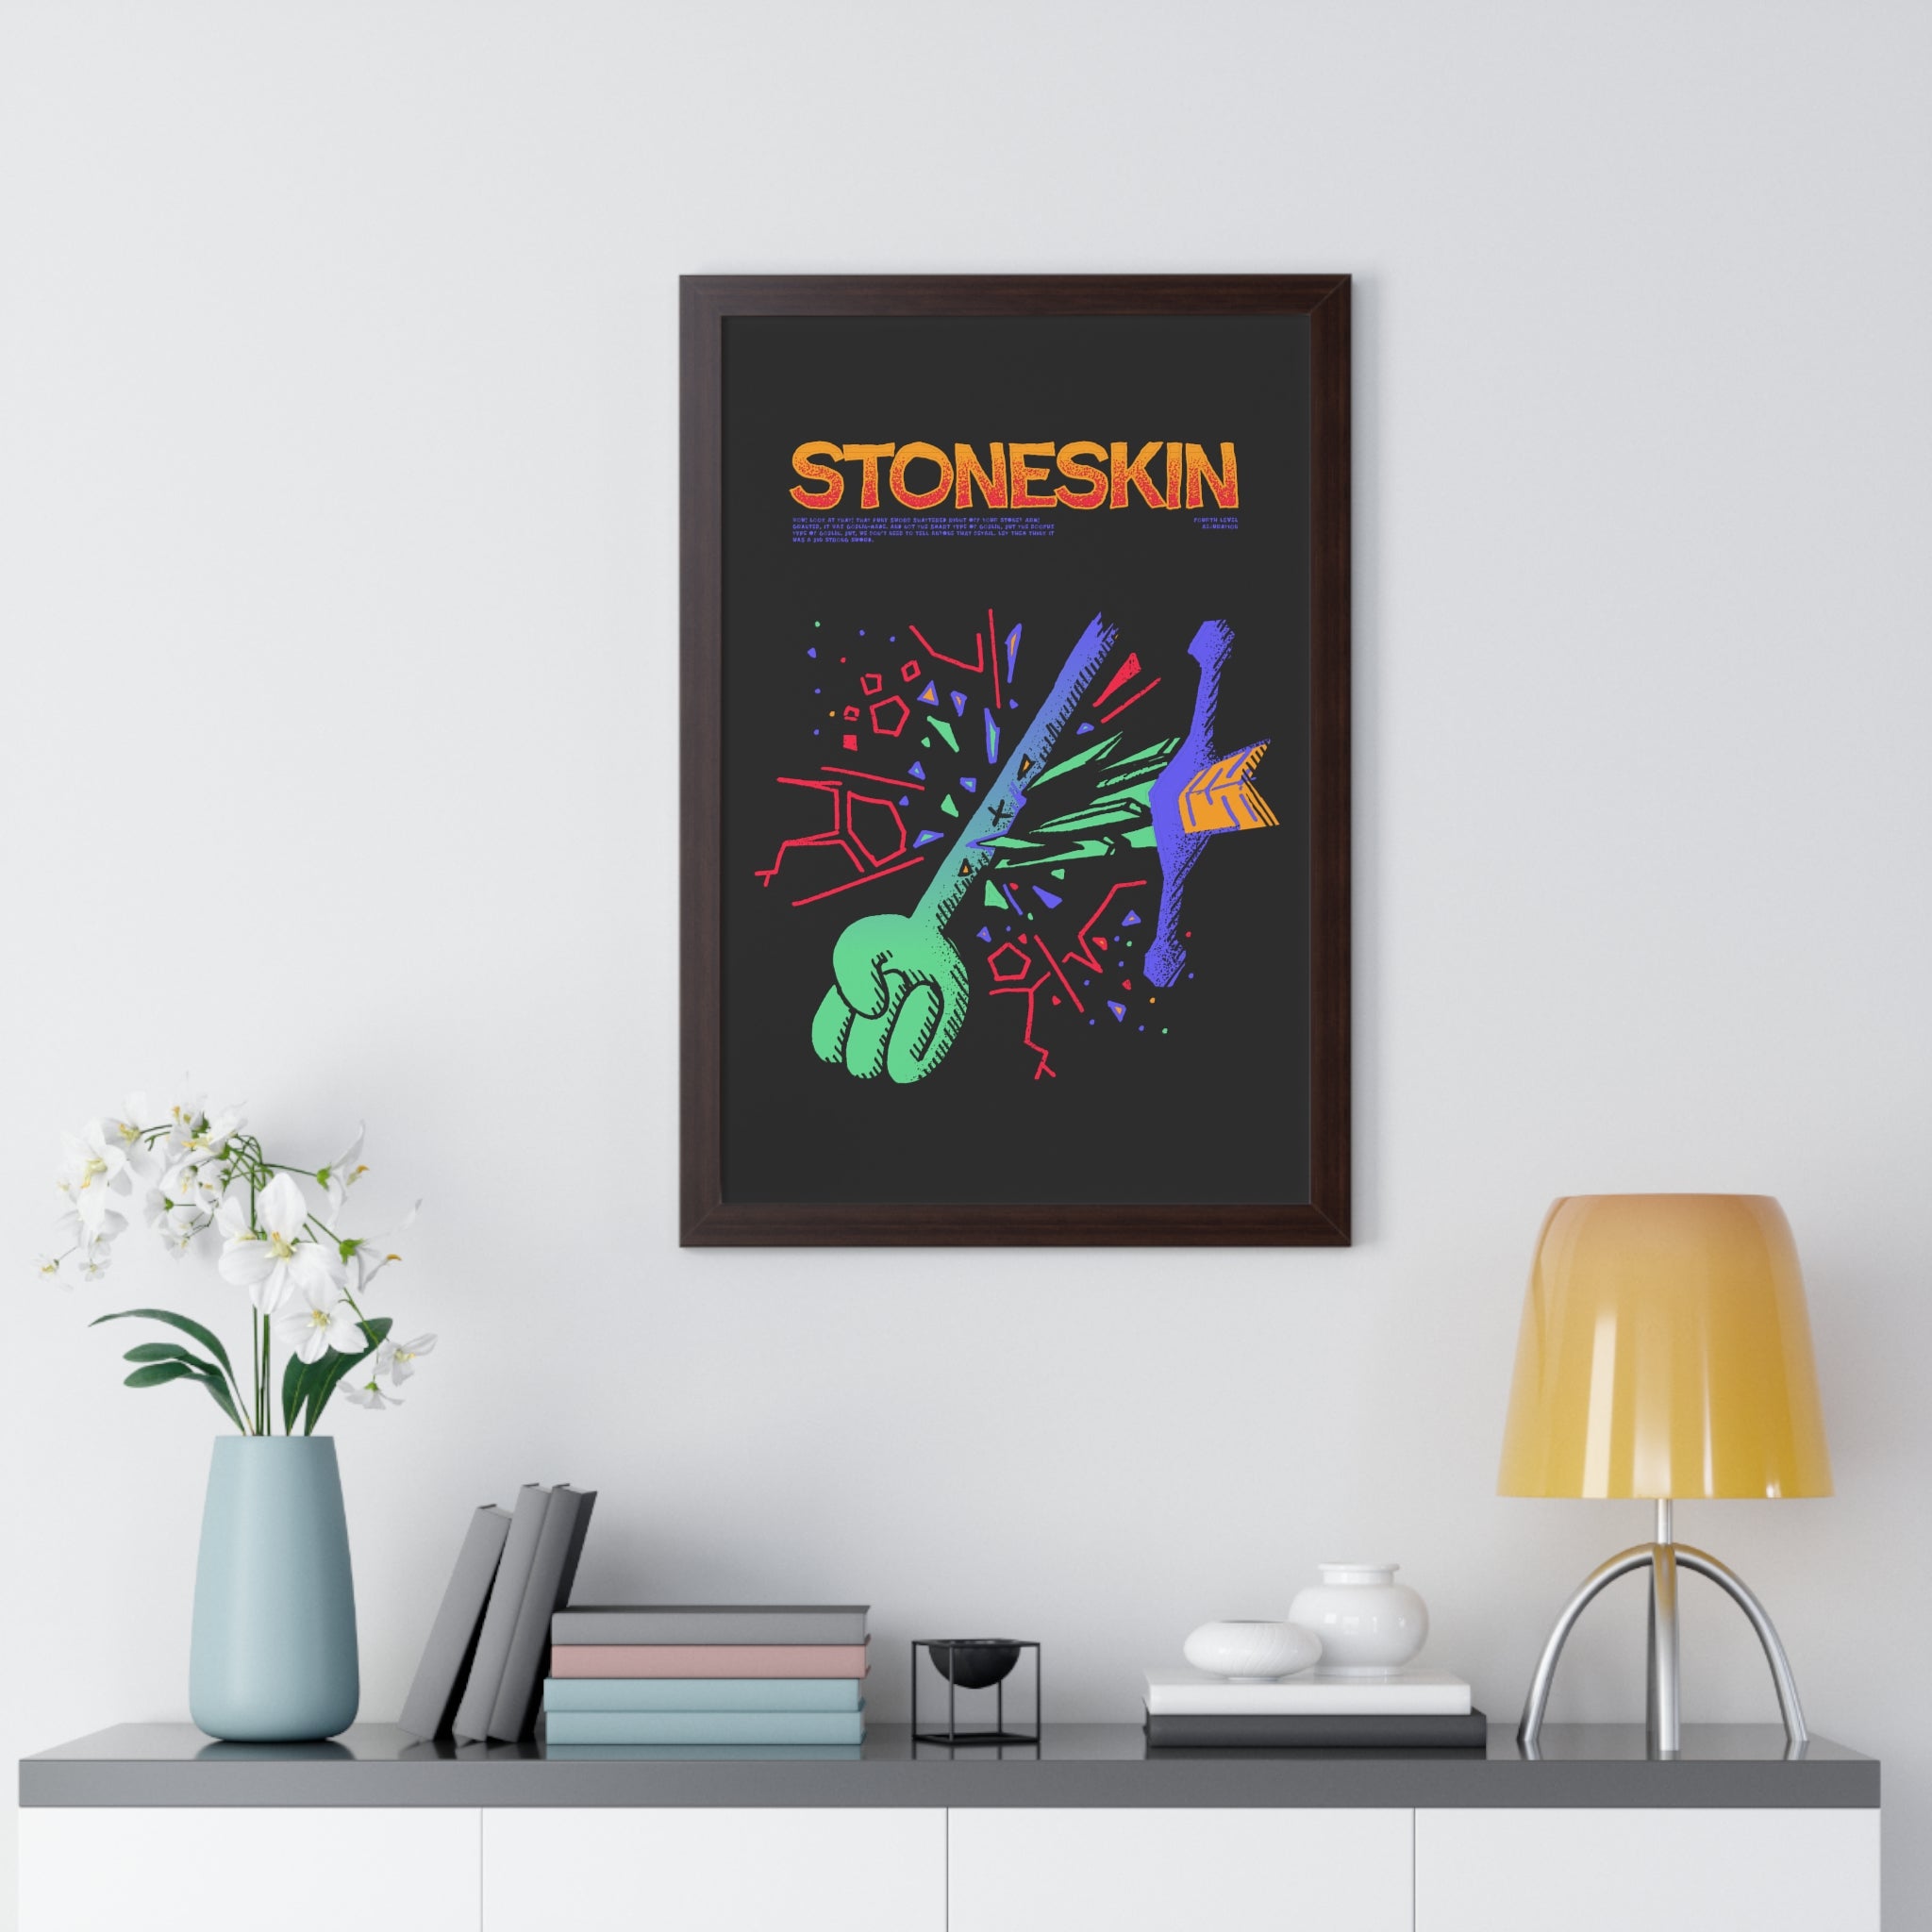 Stoneskin | Framed Poster - Framed Poster - Ace of Gnomes - 69355787044110061717